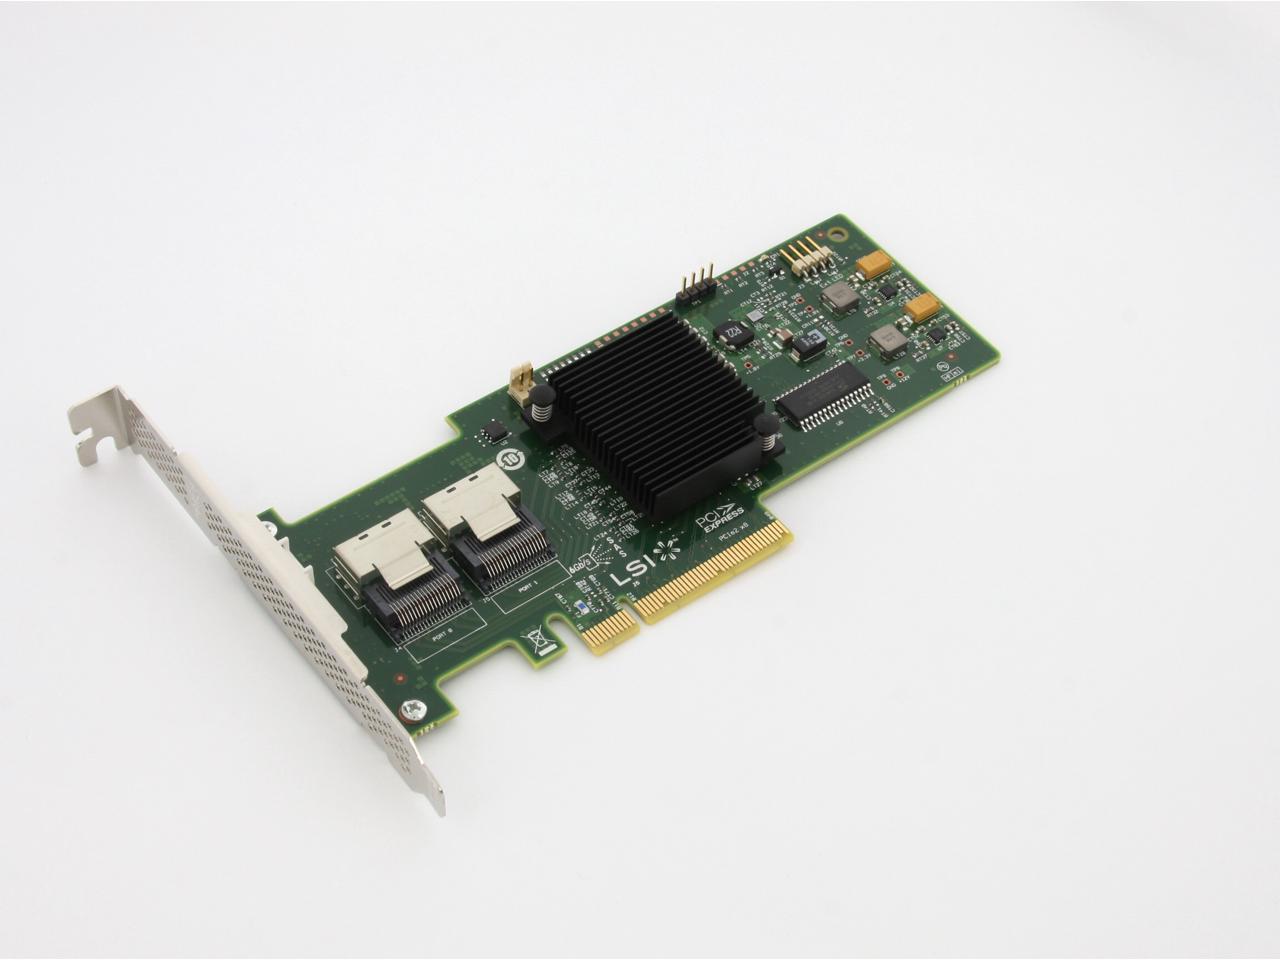 Hot LSI MegaRAID 9240-8i 8-port SAS SATA LSI00200 Server RAID Controller Card 